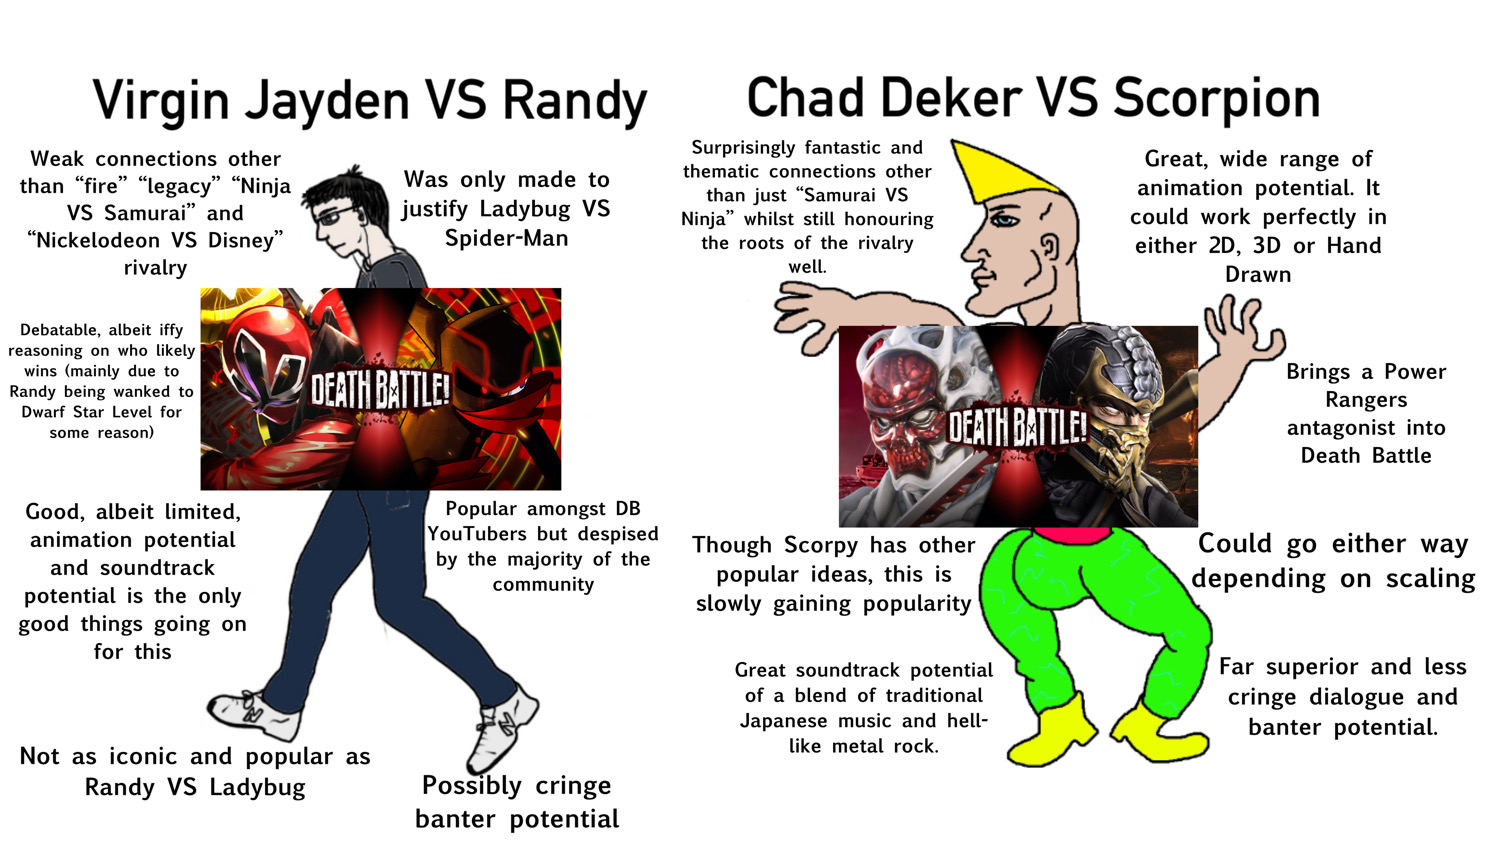 Virgin vs. Chad Meme  Chad, Memes, In meme